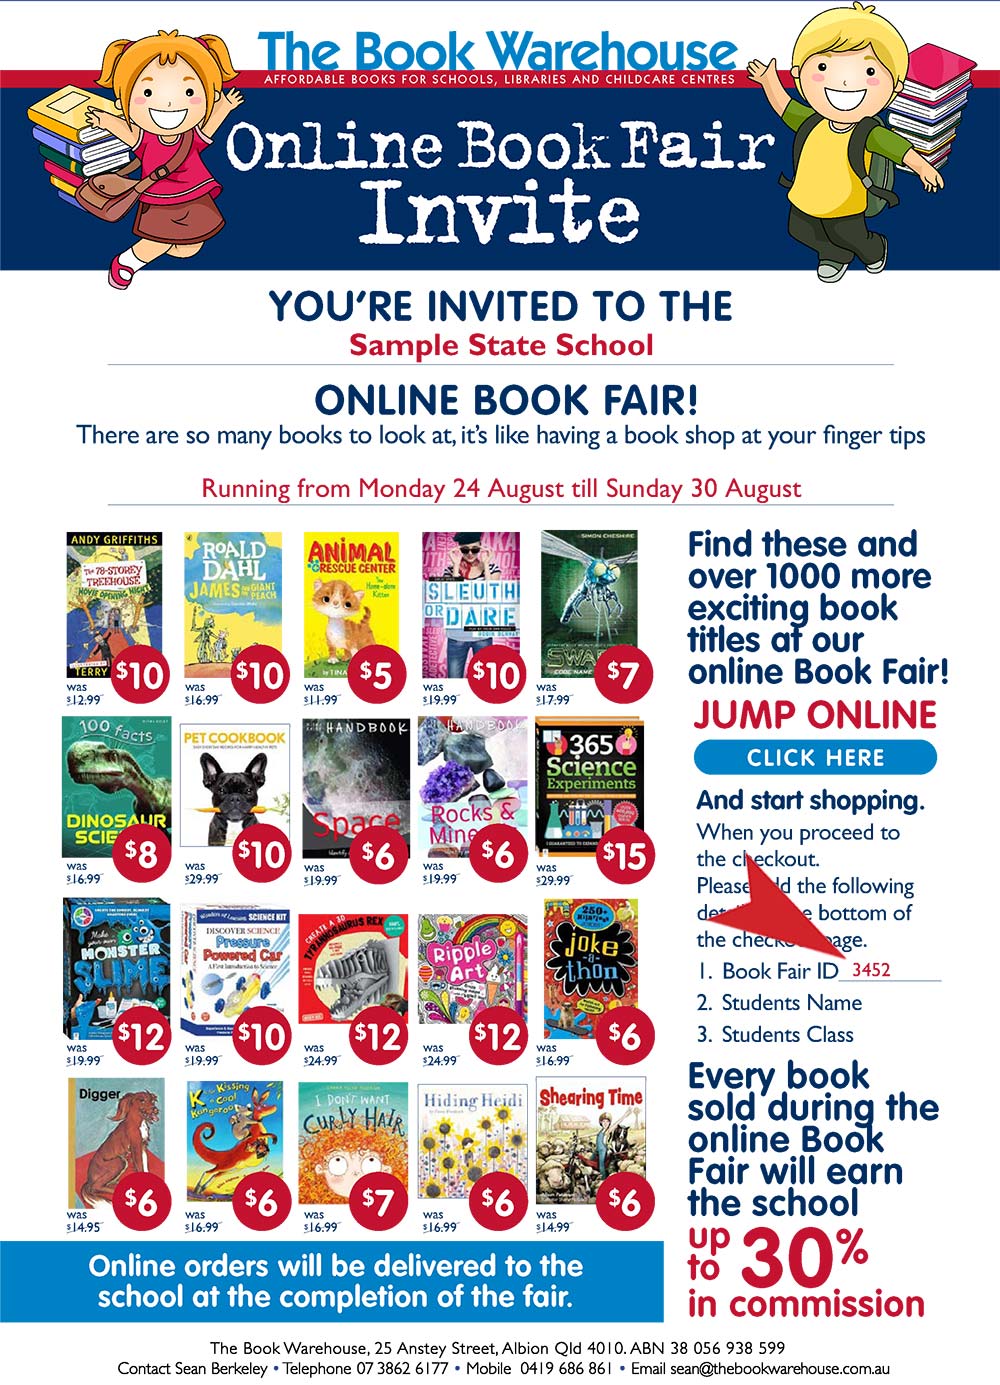 St Ambrose's Book Fair Online Invite